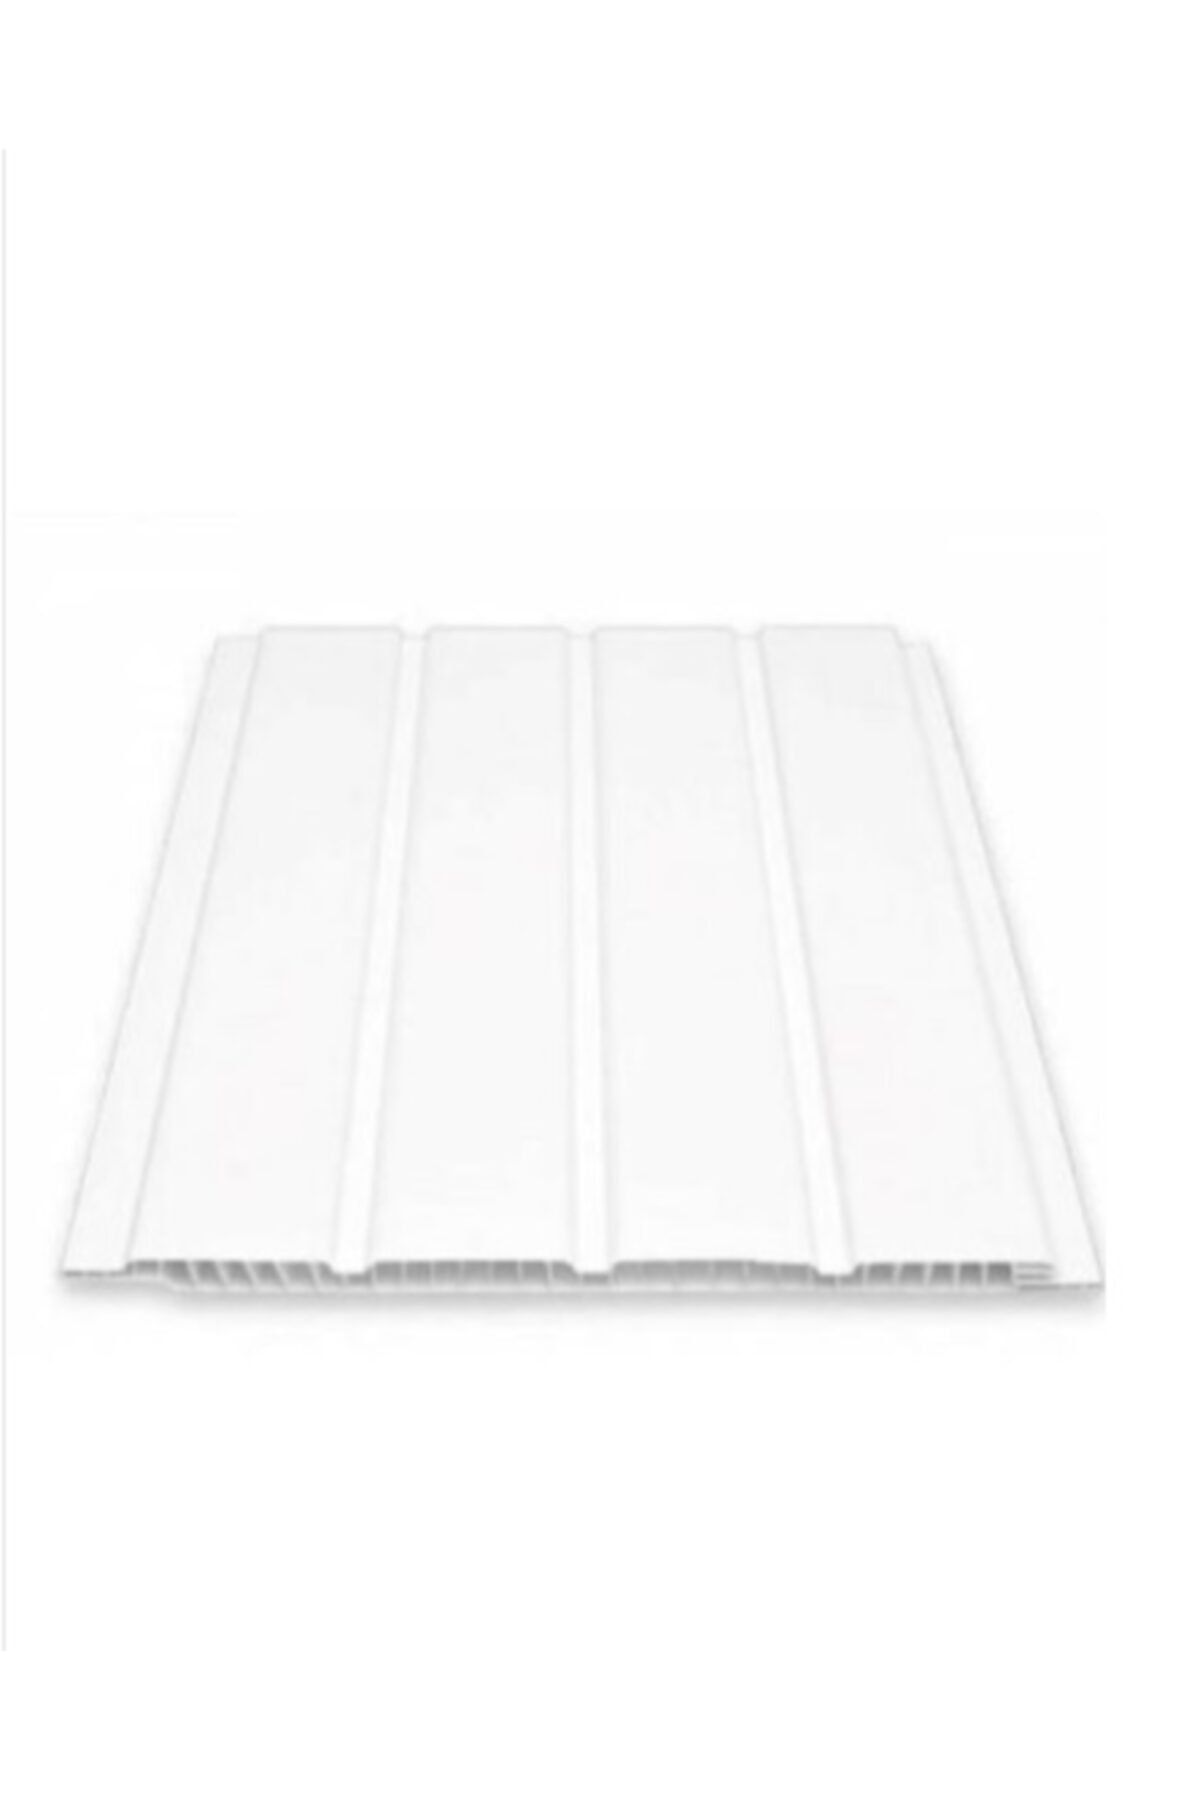 Lambiri Fugalı Beyaz Plastik Pvc Duvar - Tavan / 10 Adet 20 cm X 4 Metre - 8 Metrekare